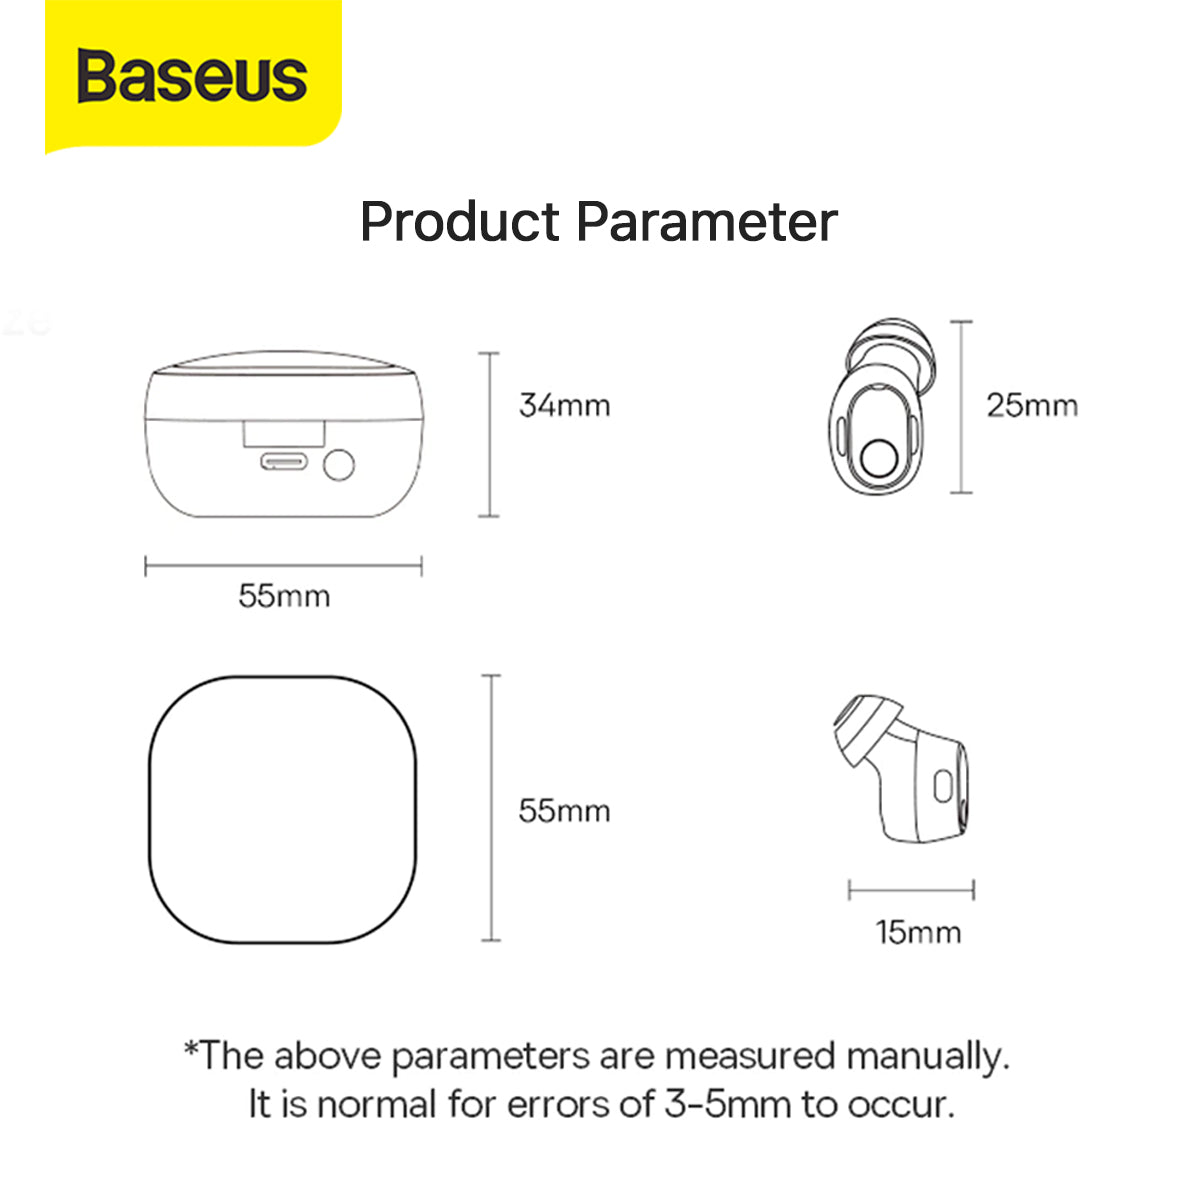 Baseus WM02 Plus TWS Headset Bluetooth Earphone Mini Earbuds Handsfree